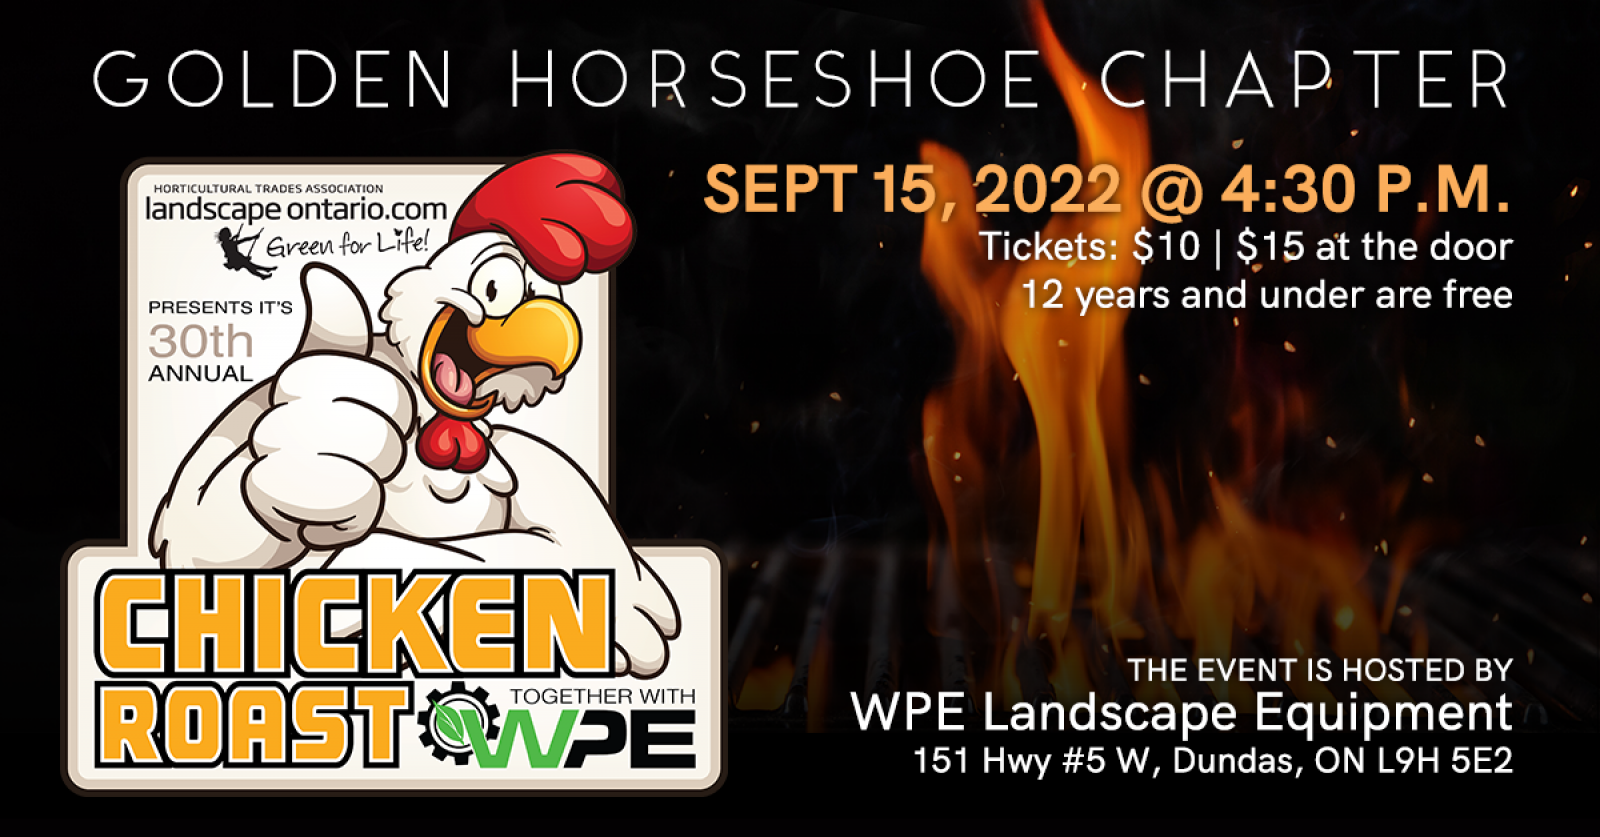 Golden Horseshoe Chapter Chicken Roast 2022